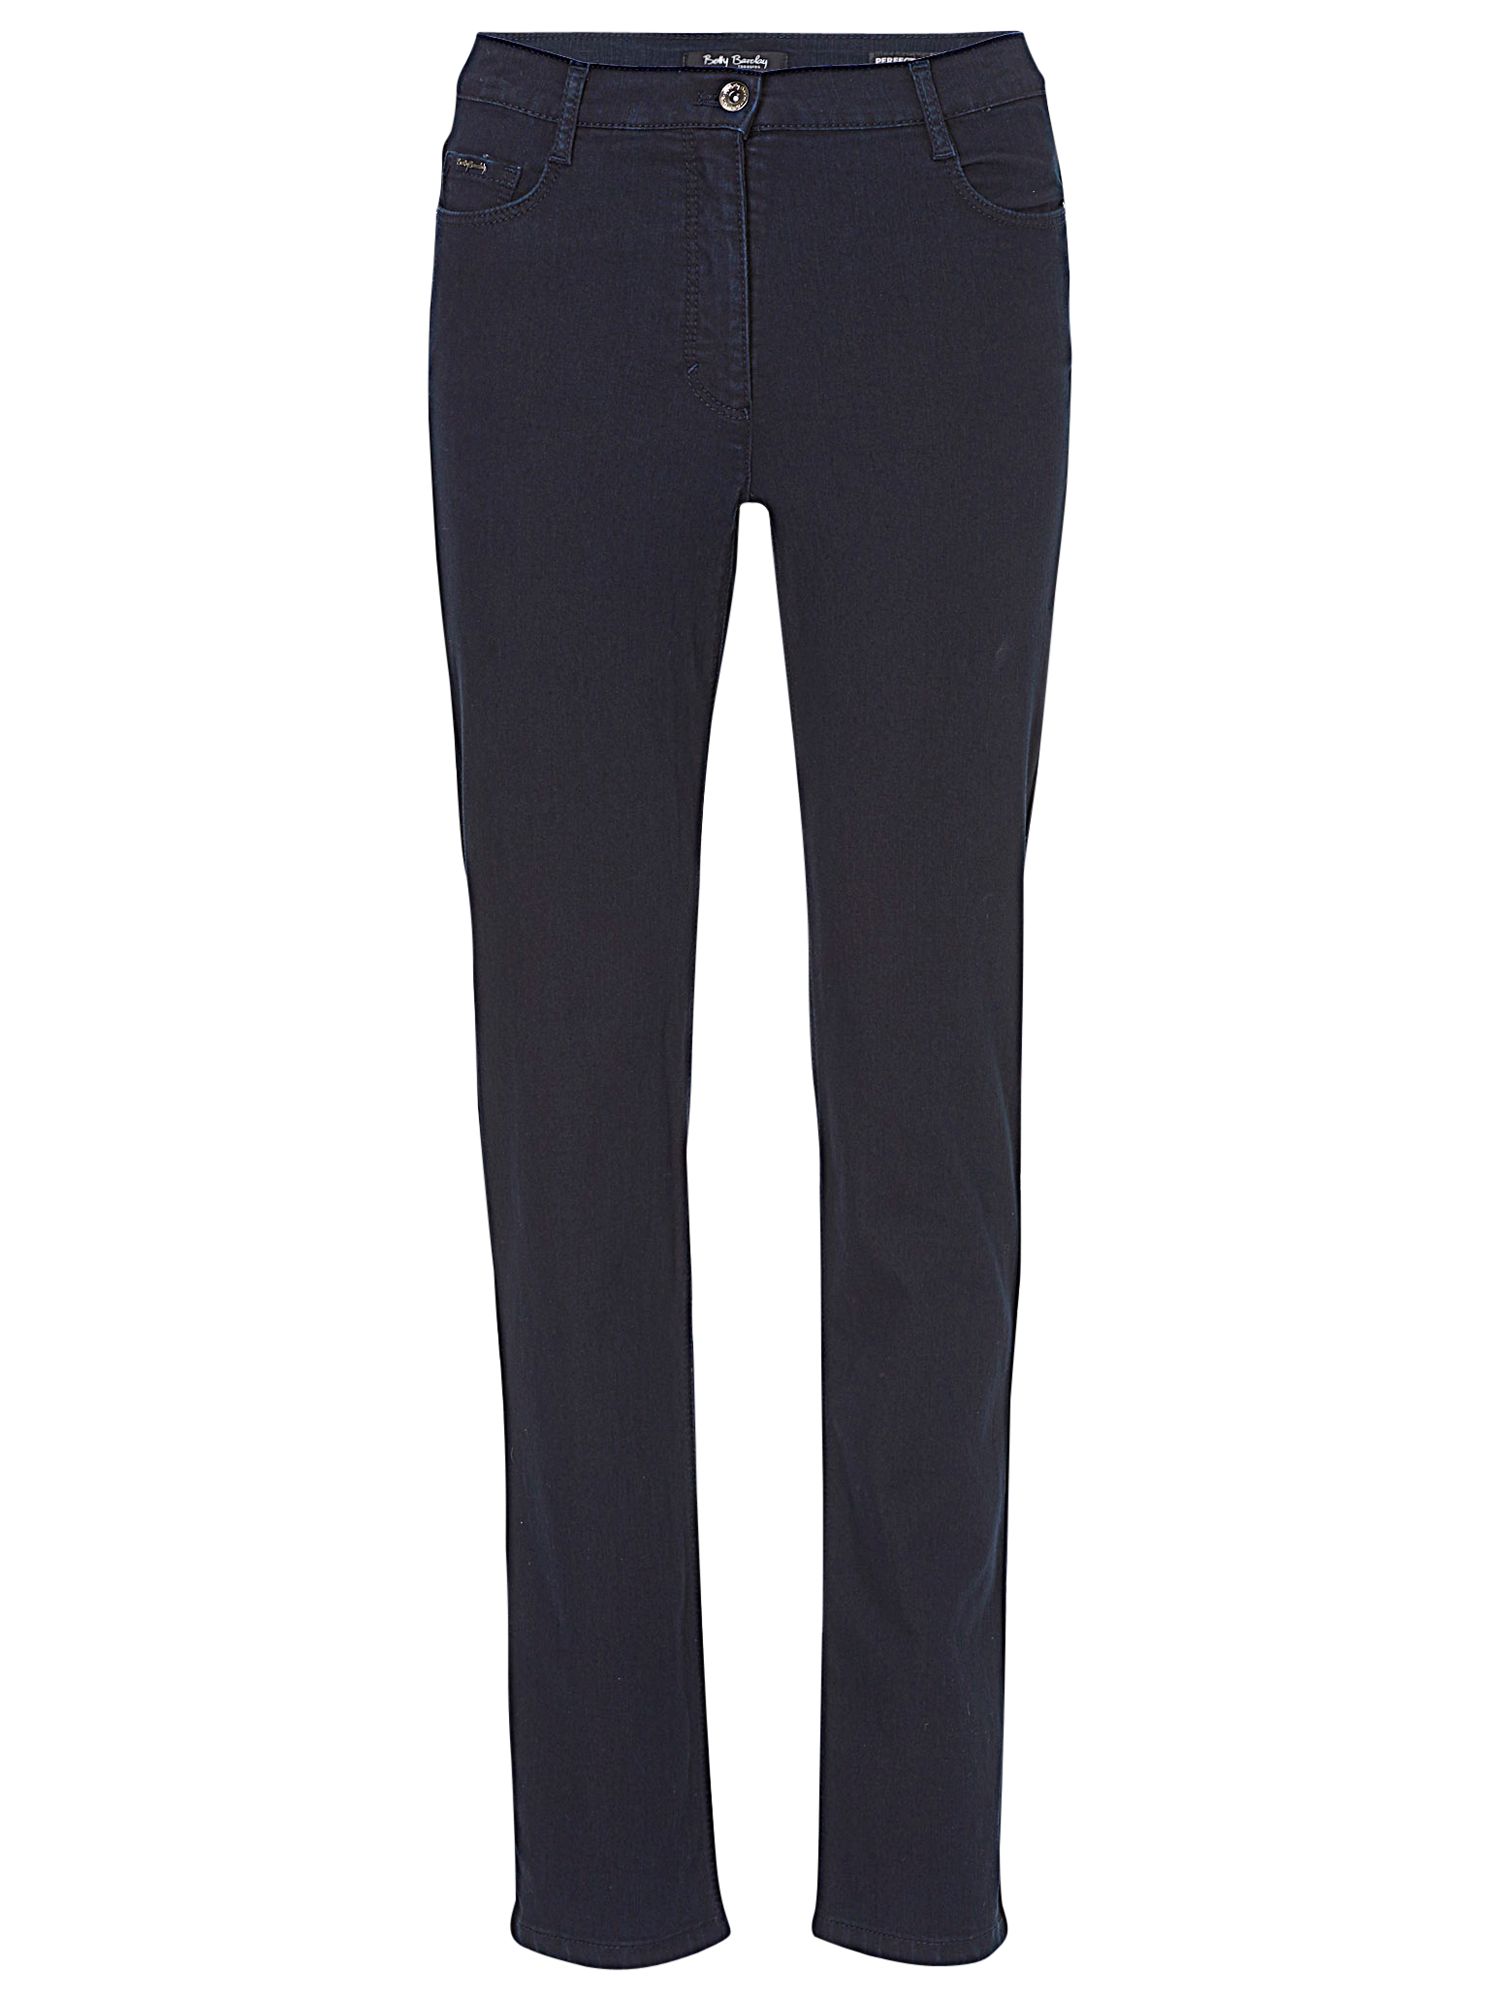 Buy Betty Barclay Perfect Body 5 Pocket Jeans, Dark Blue Denim | John Lewis